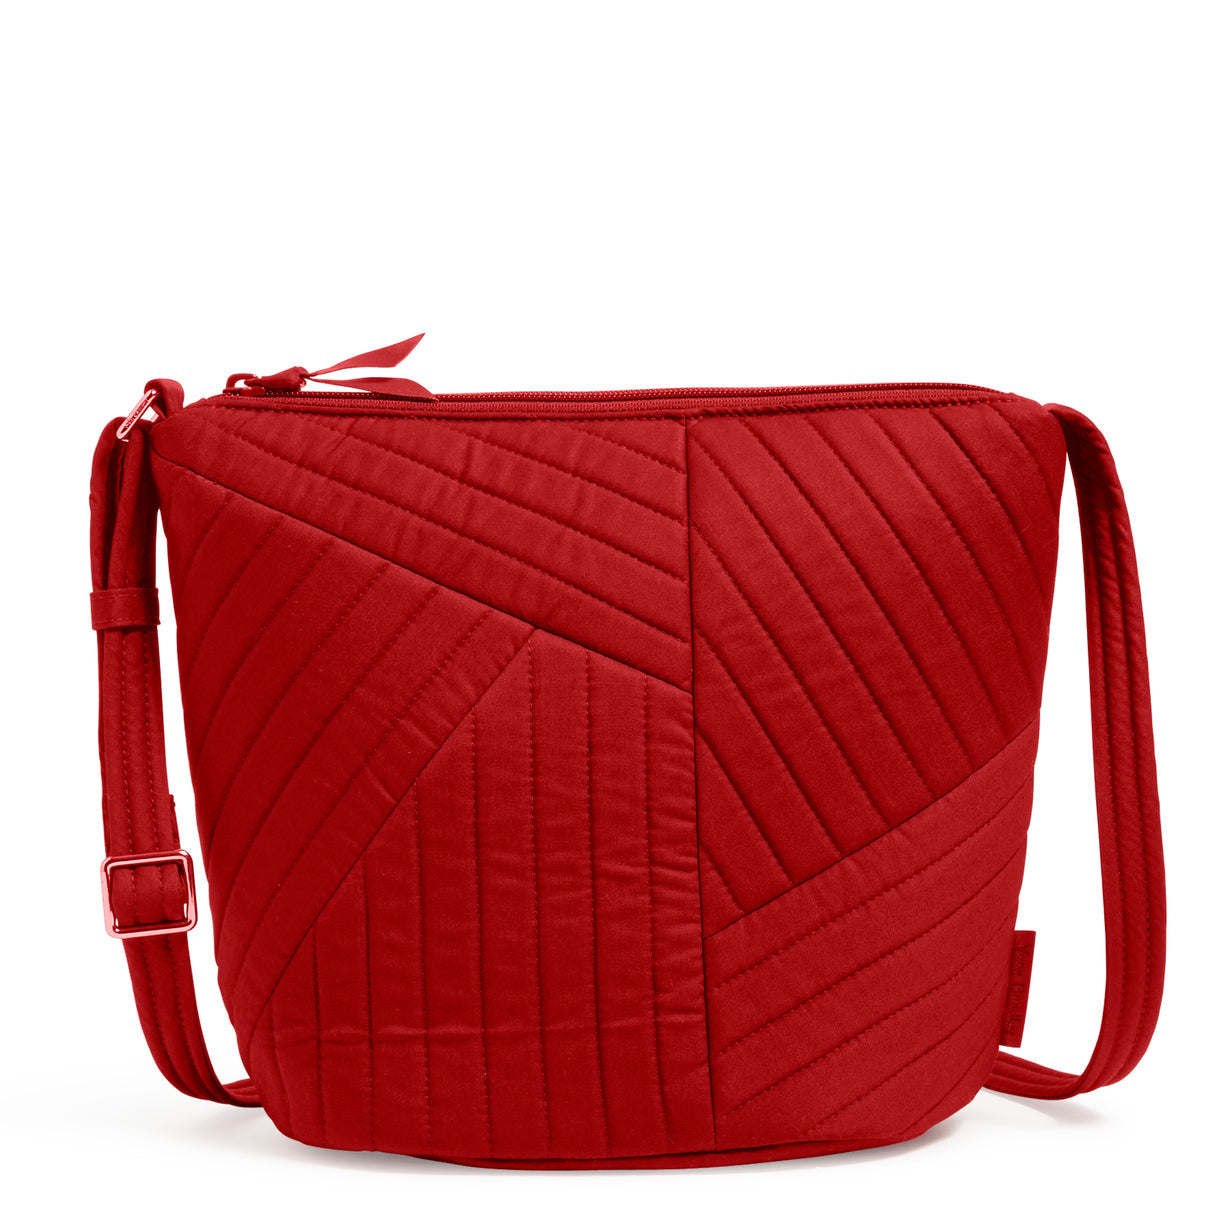 Vera Bradley Bucket Crossbody Bag - Cardinal Red